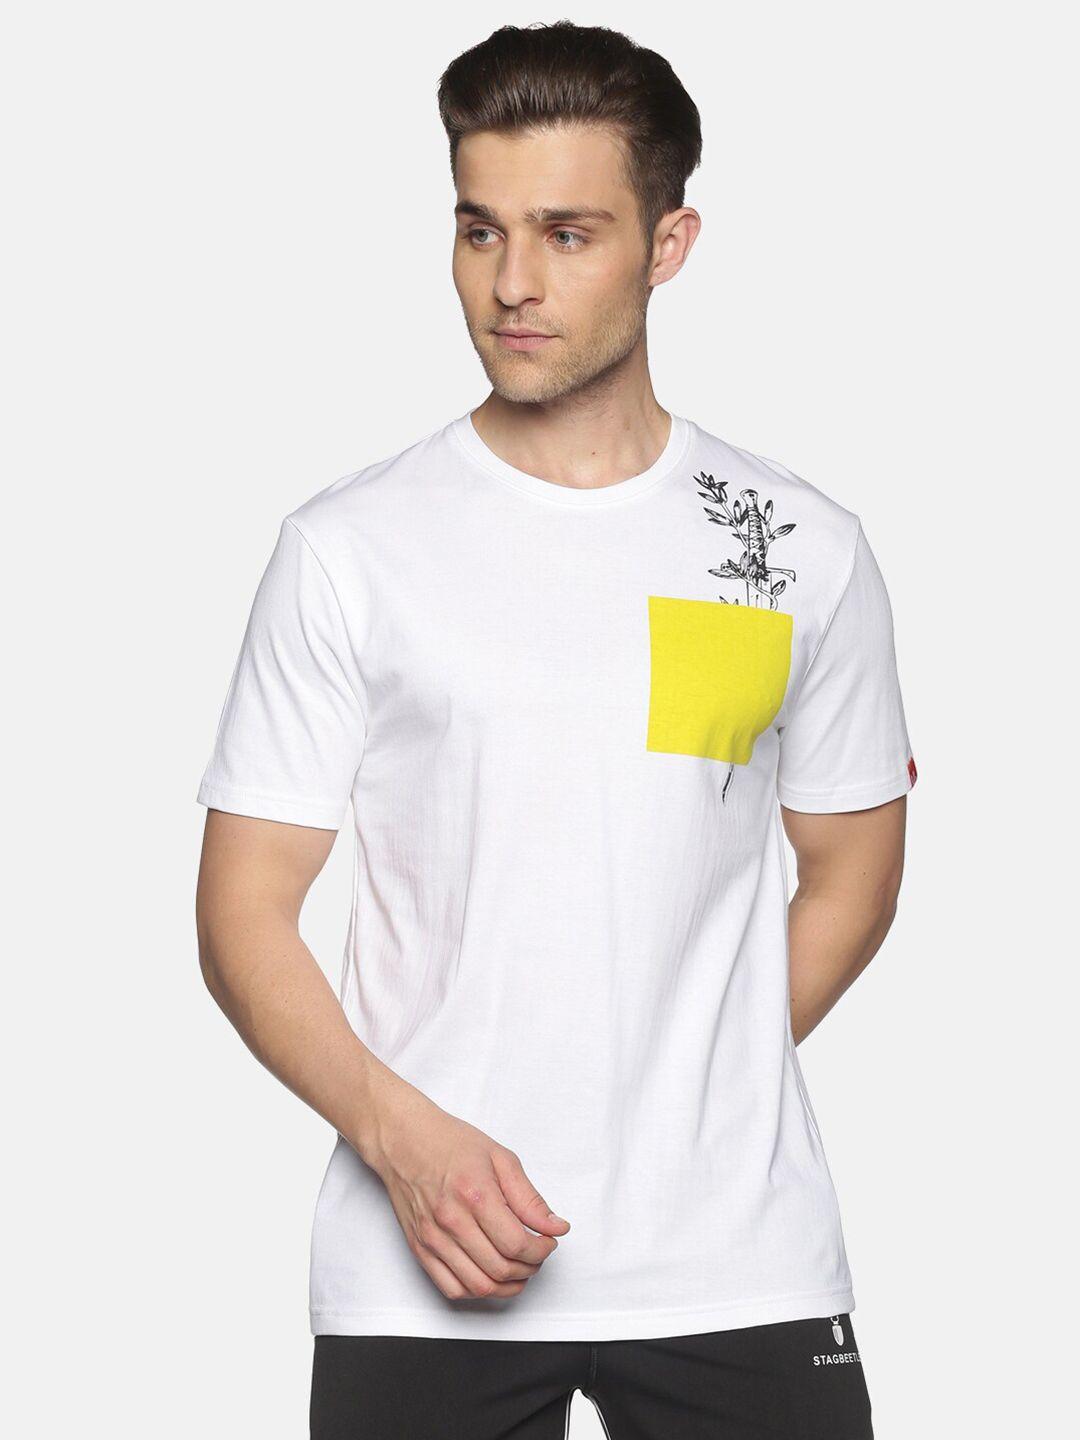 urgear men white & yellow printed yoga t-shirt